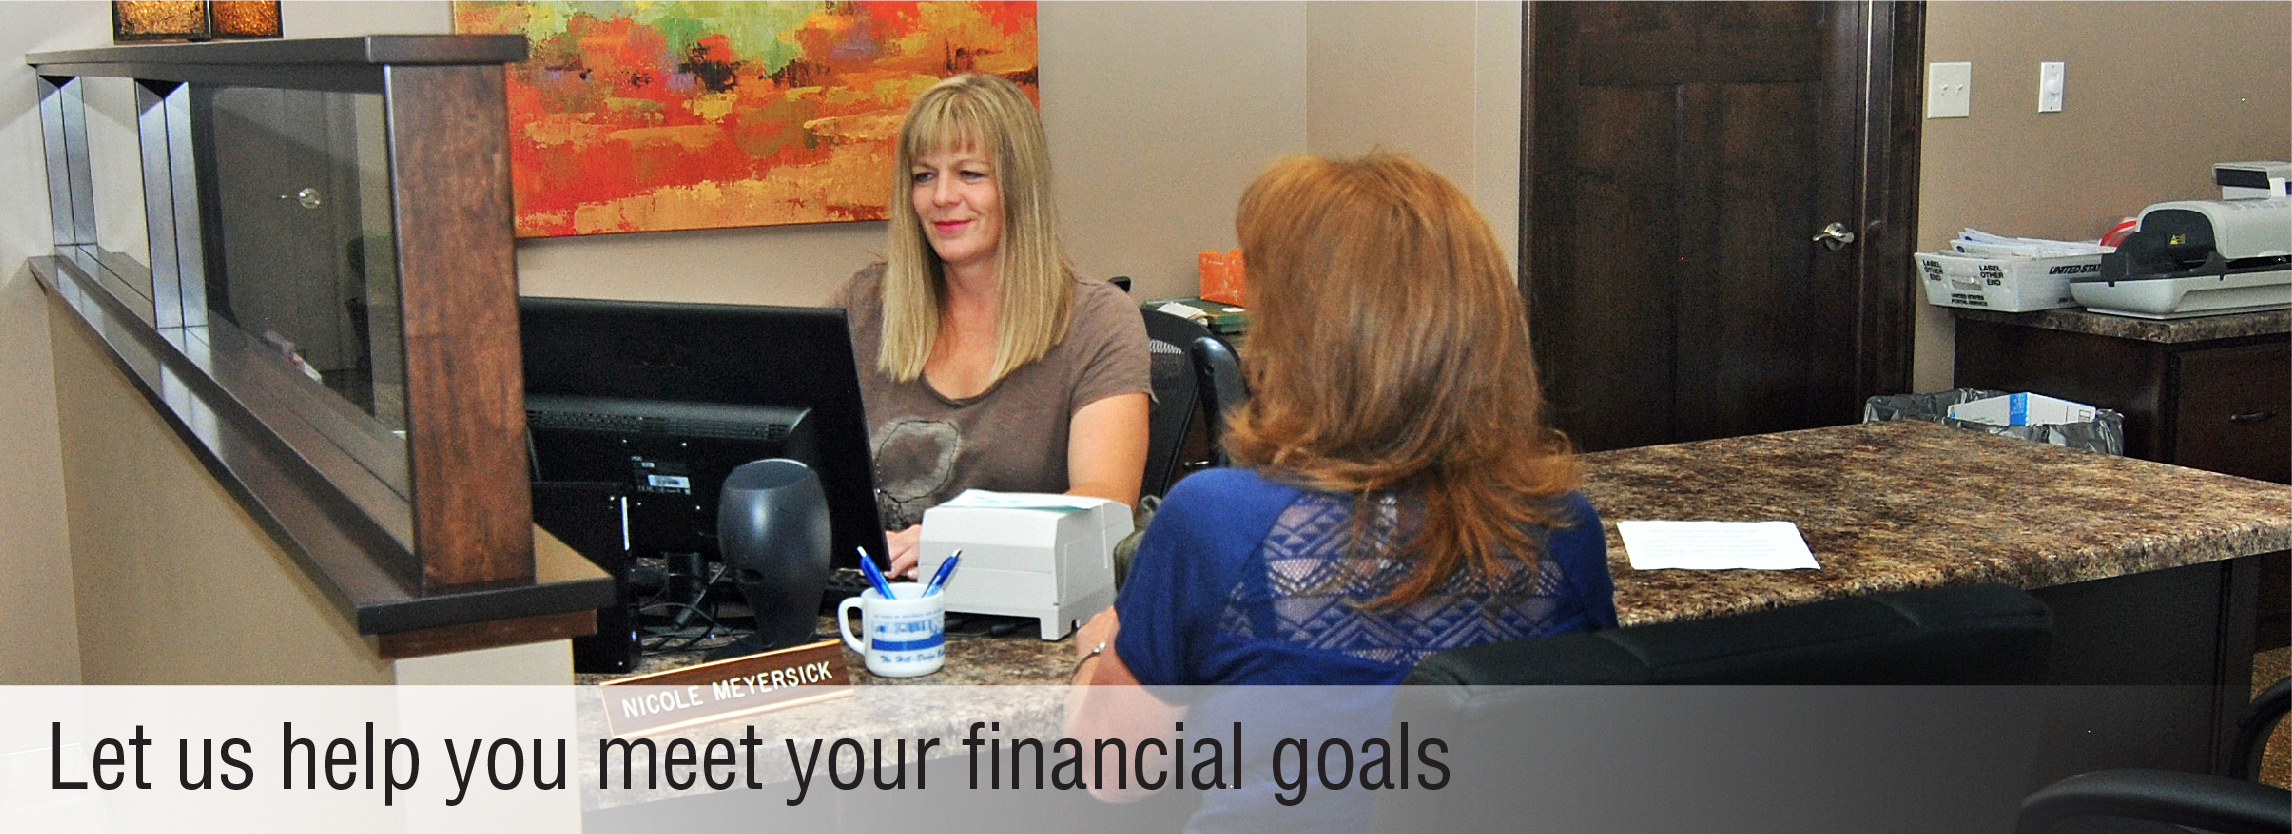 Let us help you meet your financial goals.